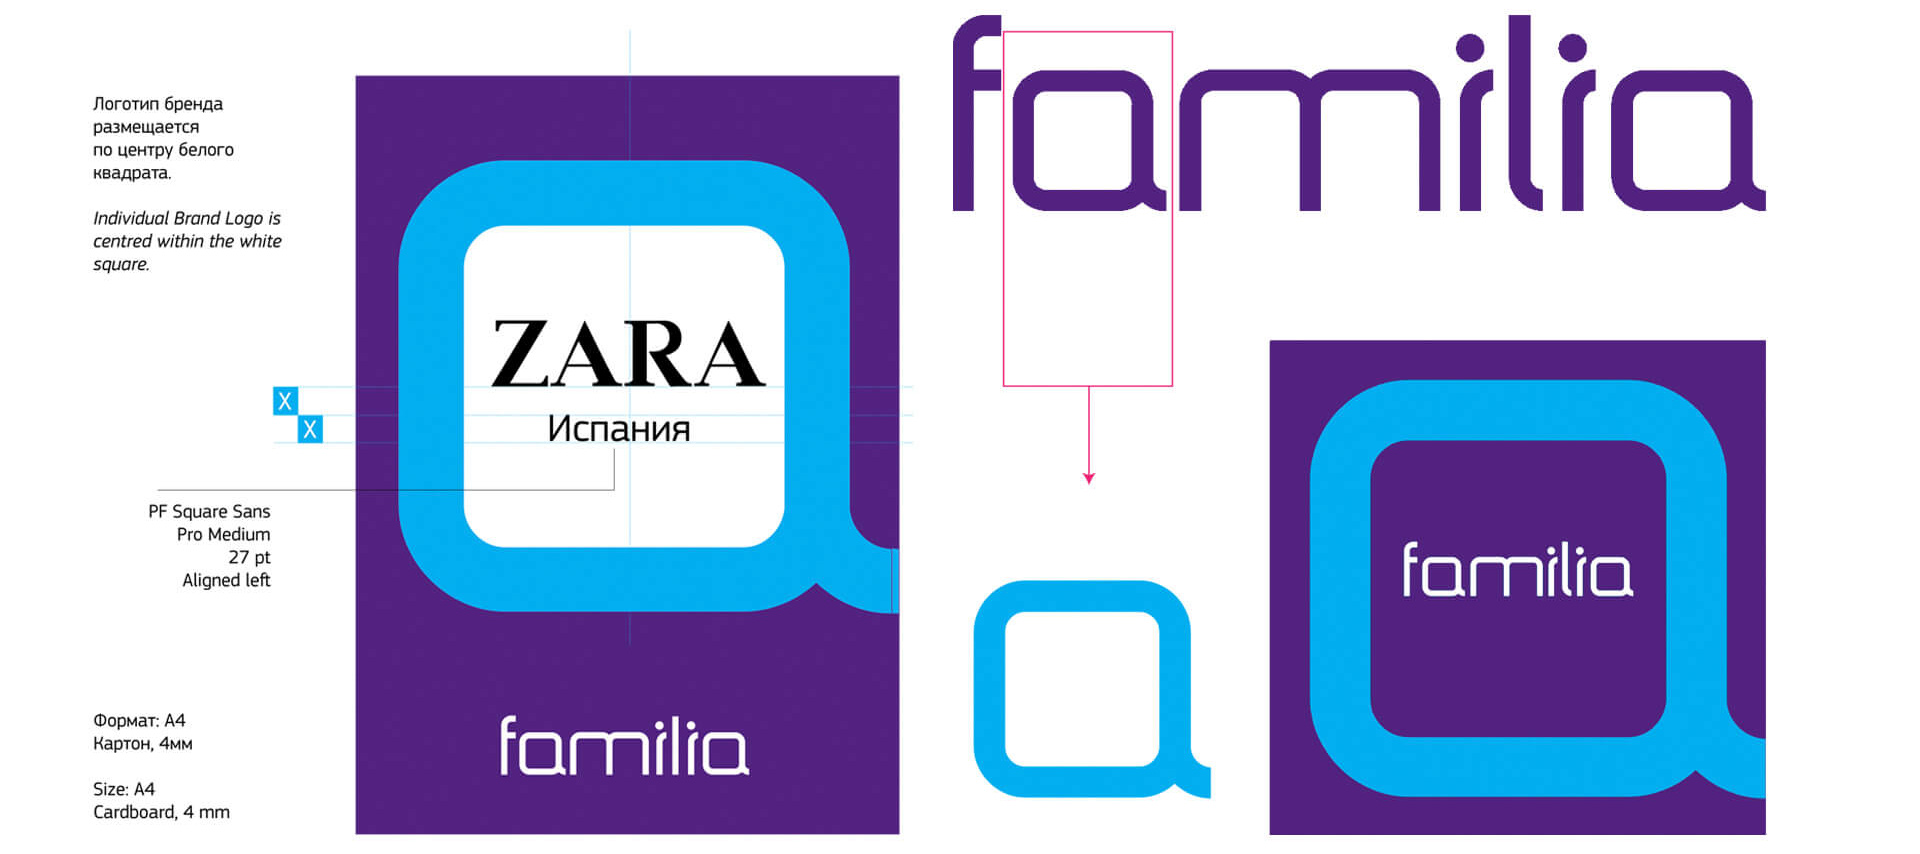 Familia fashion stores brand identity Russia, communications